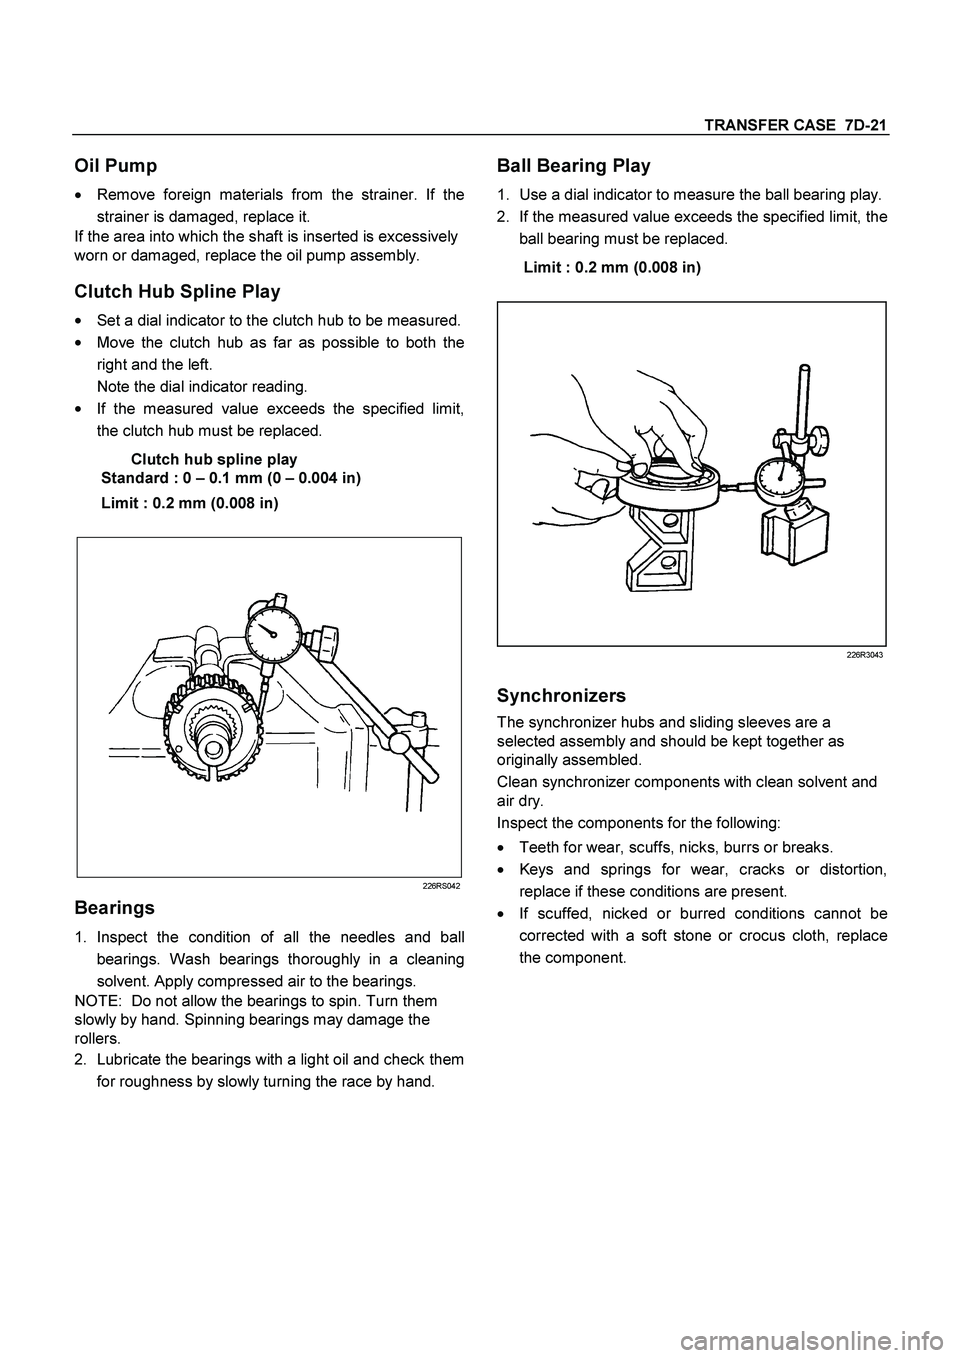 ISUZU TF SERIES 2004  Workshop Manual TRANSFER CASE  7D-21
 
Oil Pump 
 
Remove foreign materials from the strainer. If the 
strainer is damaged, replace it. 
If the area into which the shaft is inserted is excessively 
worn or damaged, 